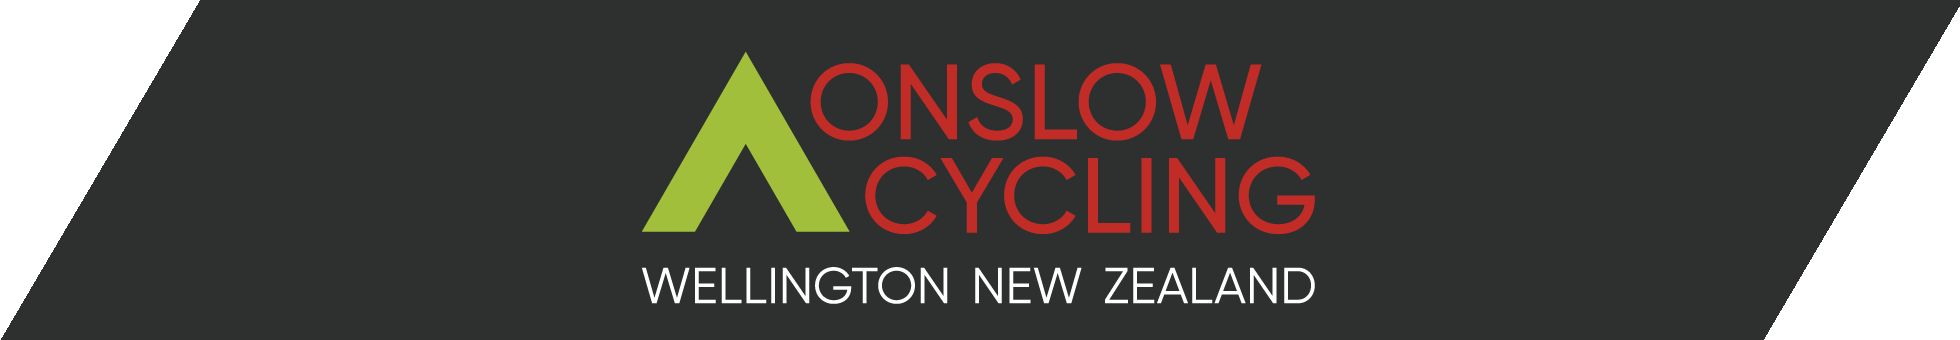 Onslow Cycling, Wellington New Zealand